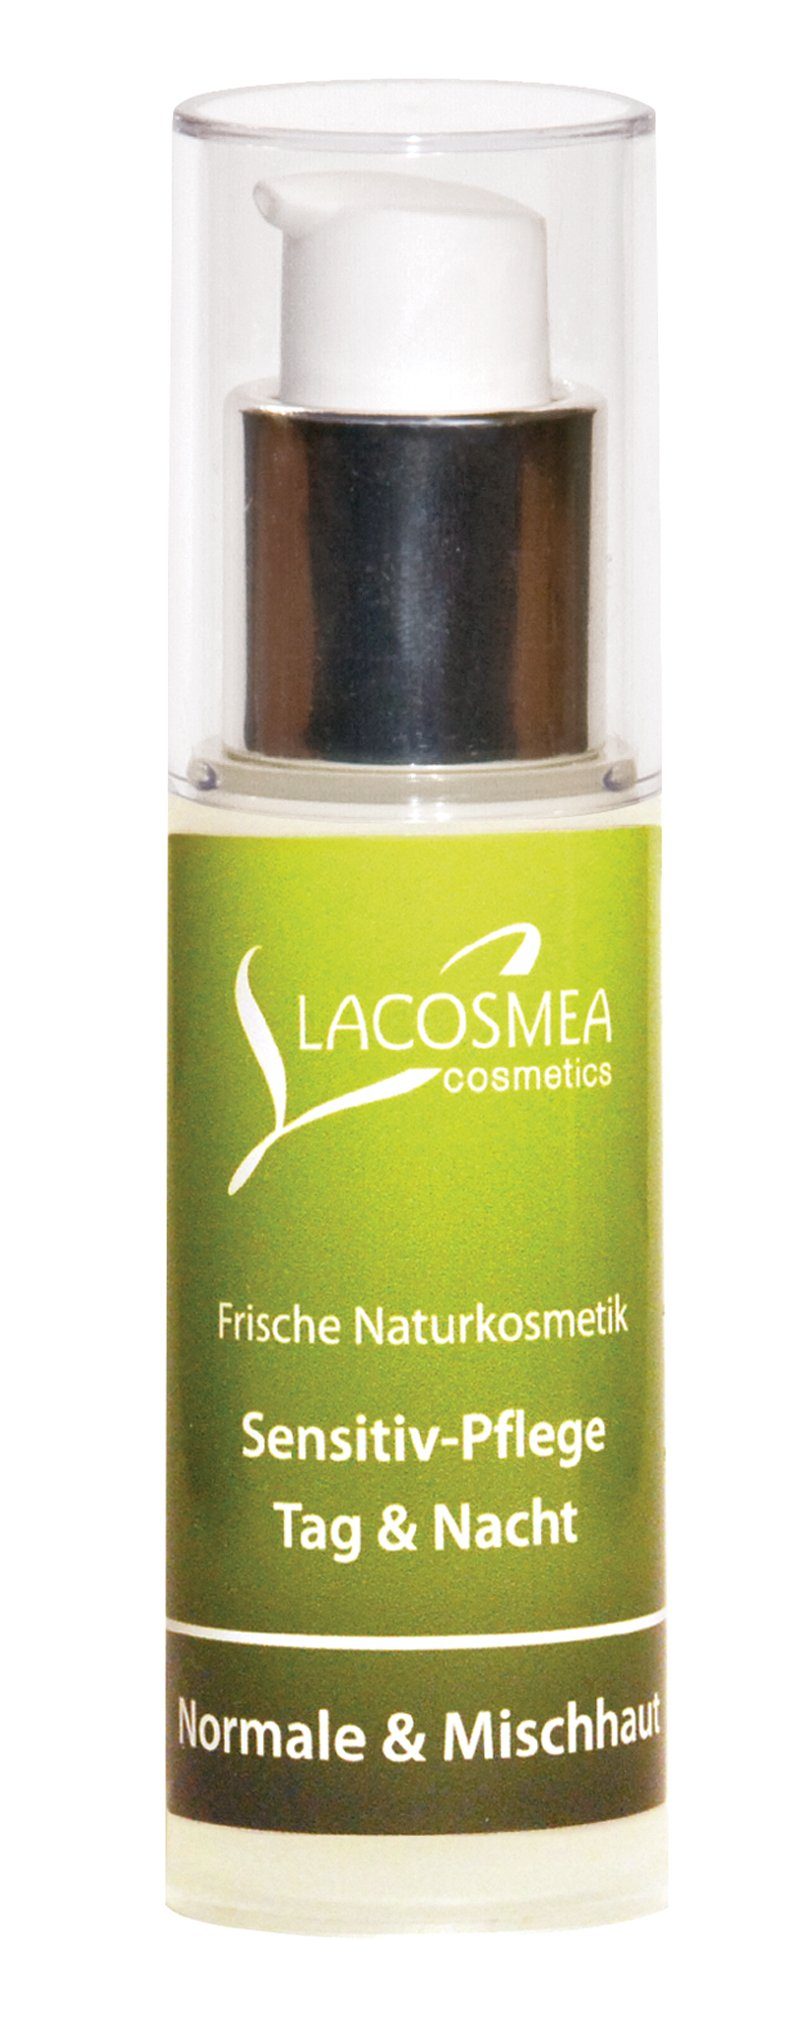 Sensitivpflege Gesichtspflege & Cosmetics normale Mischhaut Lacosmea für